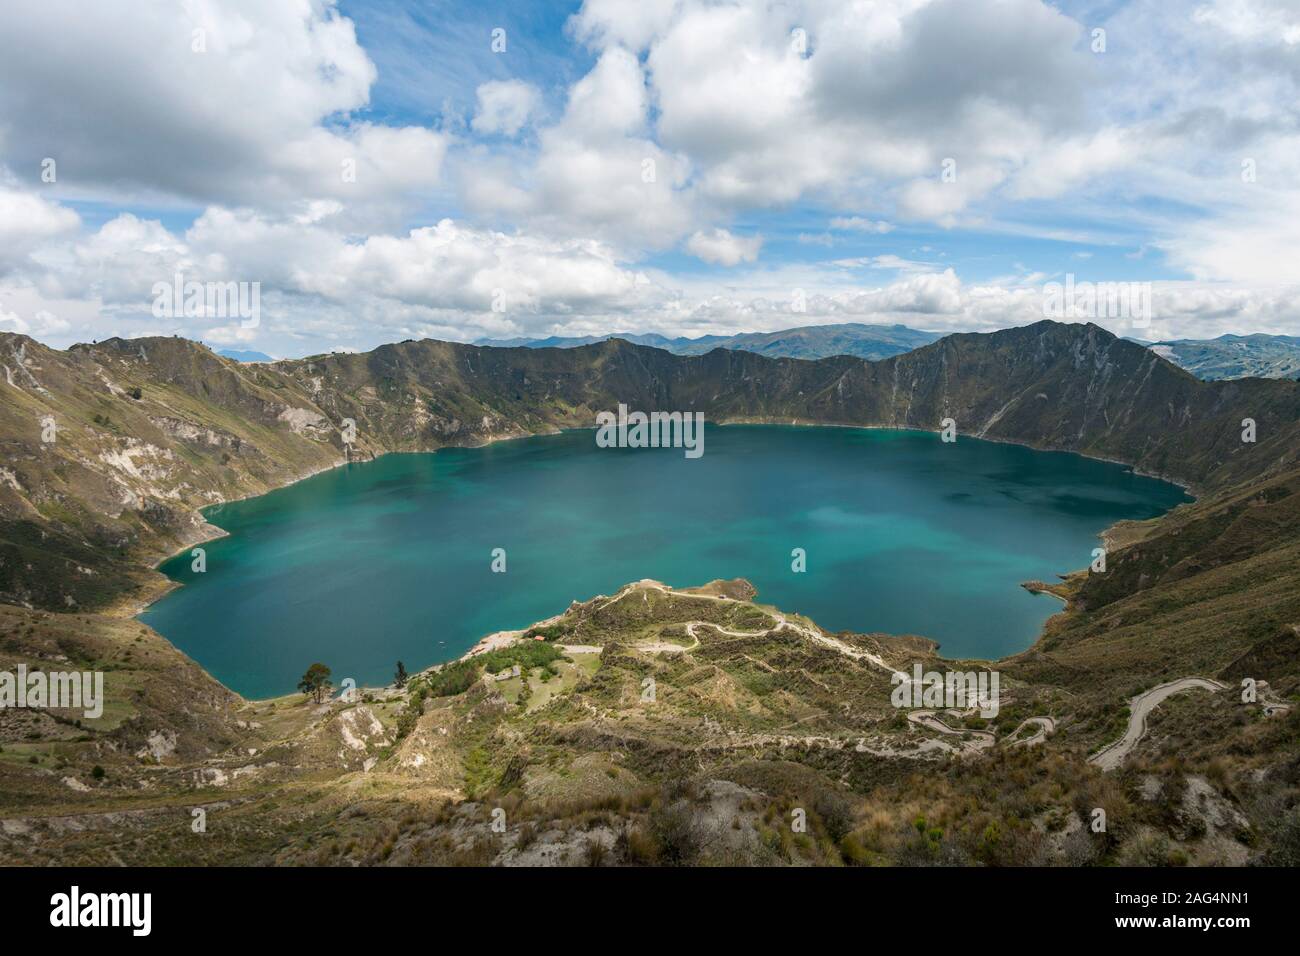 The lake in the caldera of the Quilotoa volcano in Ecuador. Stock Photo